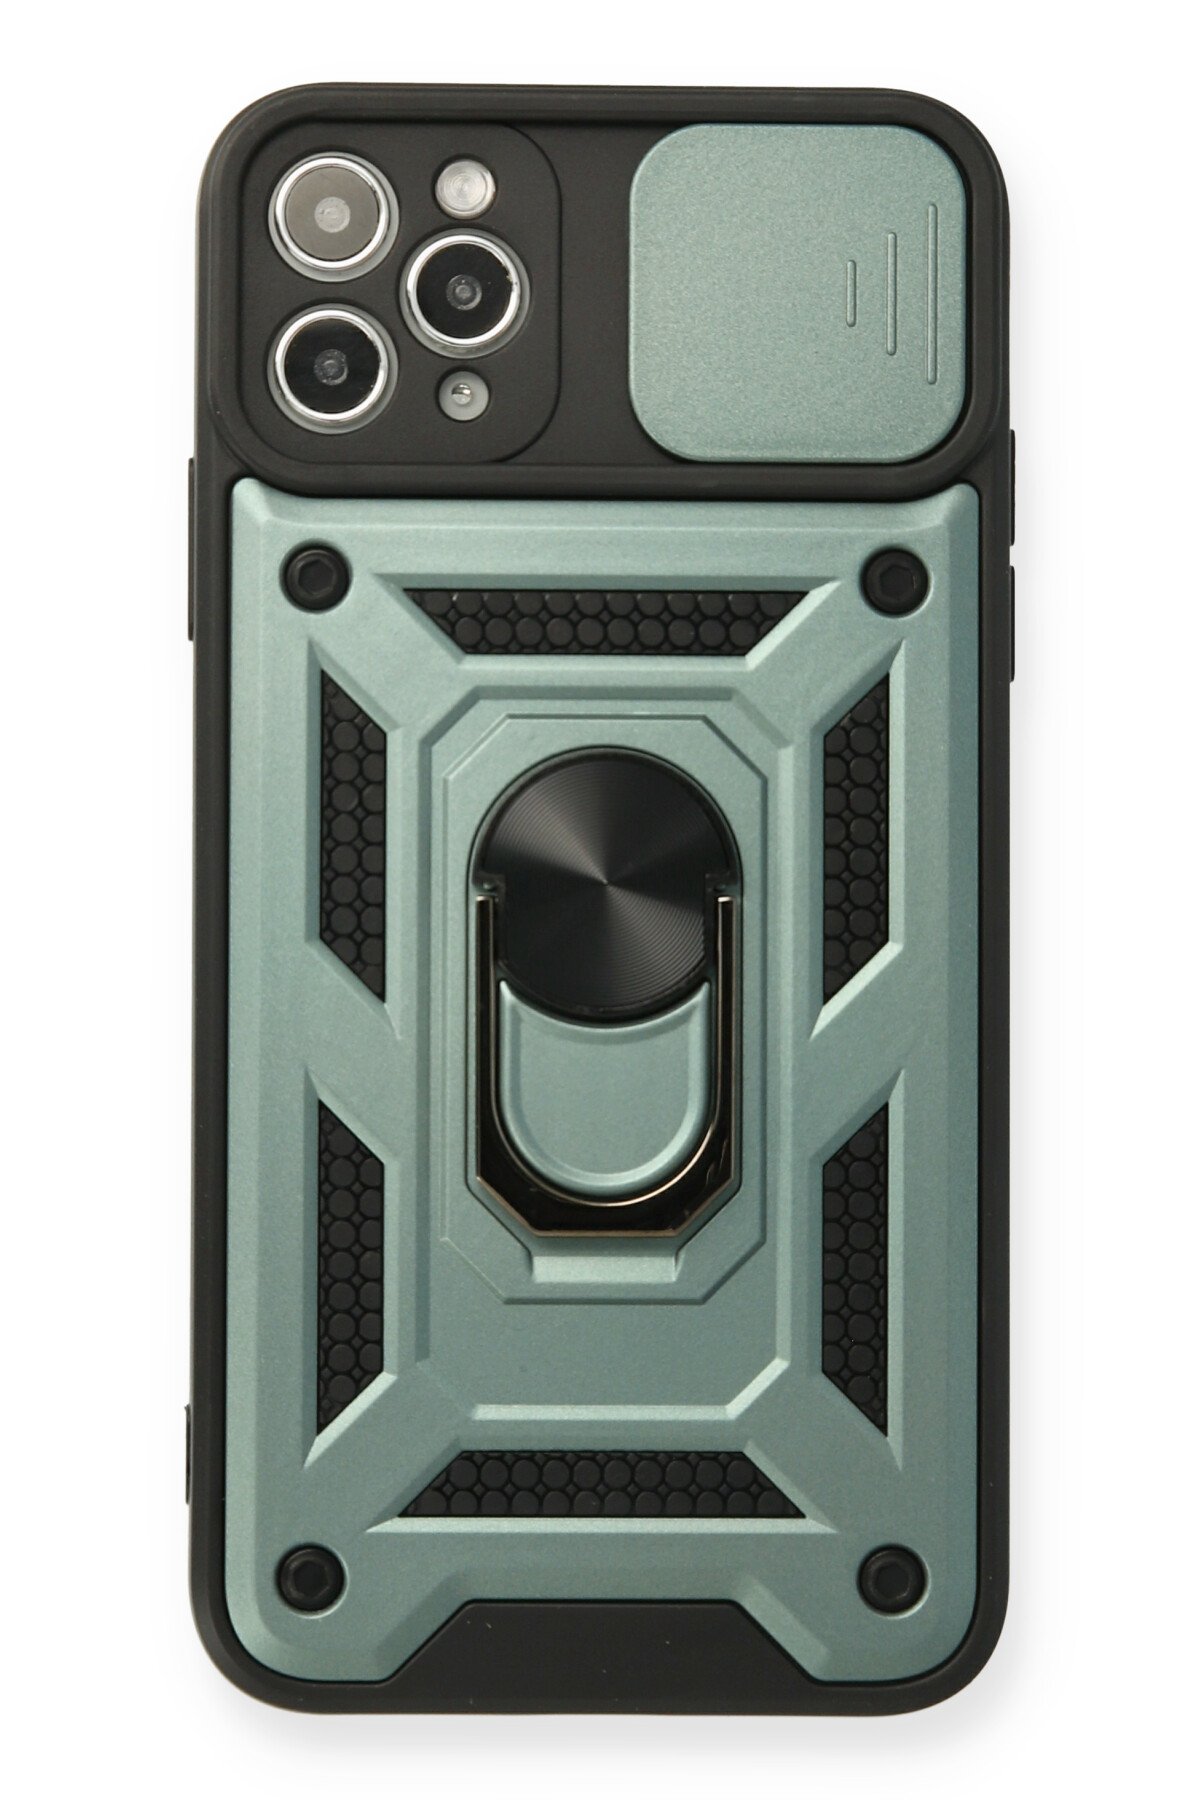 Newface iPhone 11 Pro Max Kılıf Puma Silikon - Yeşil